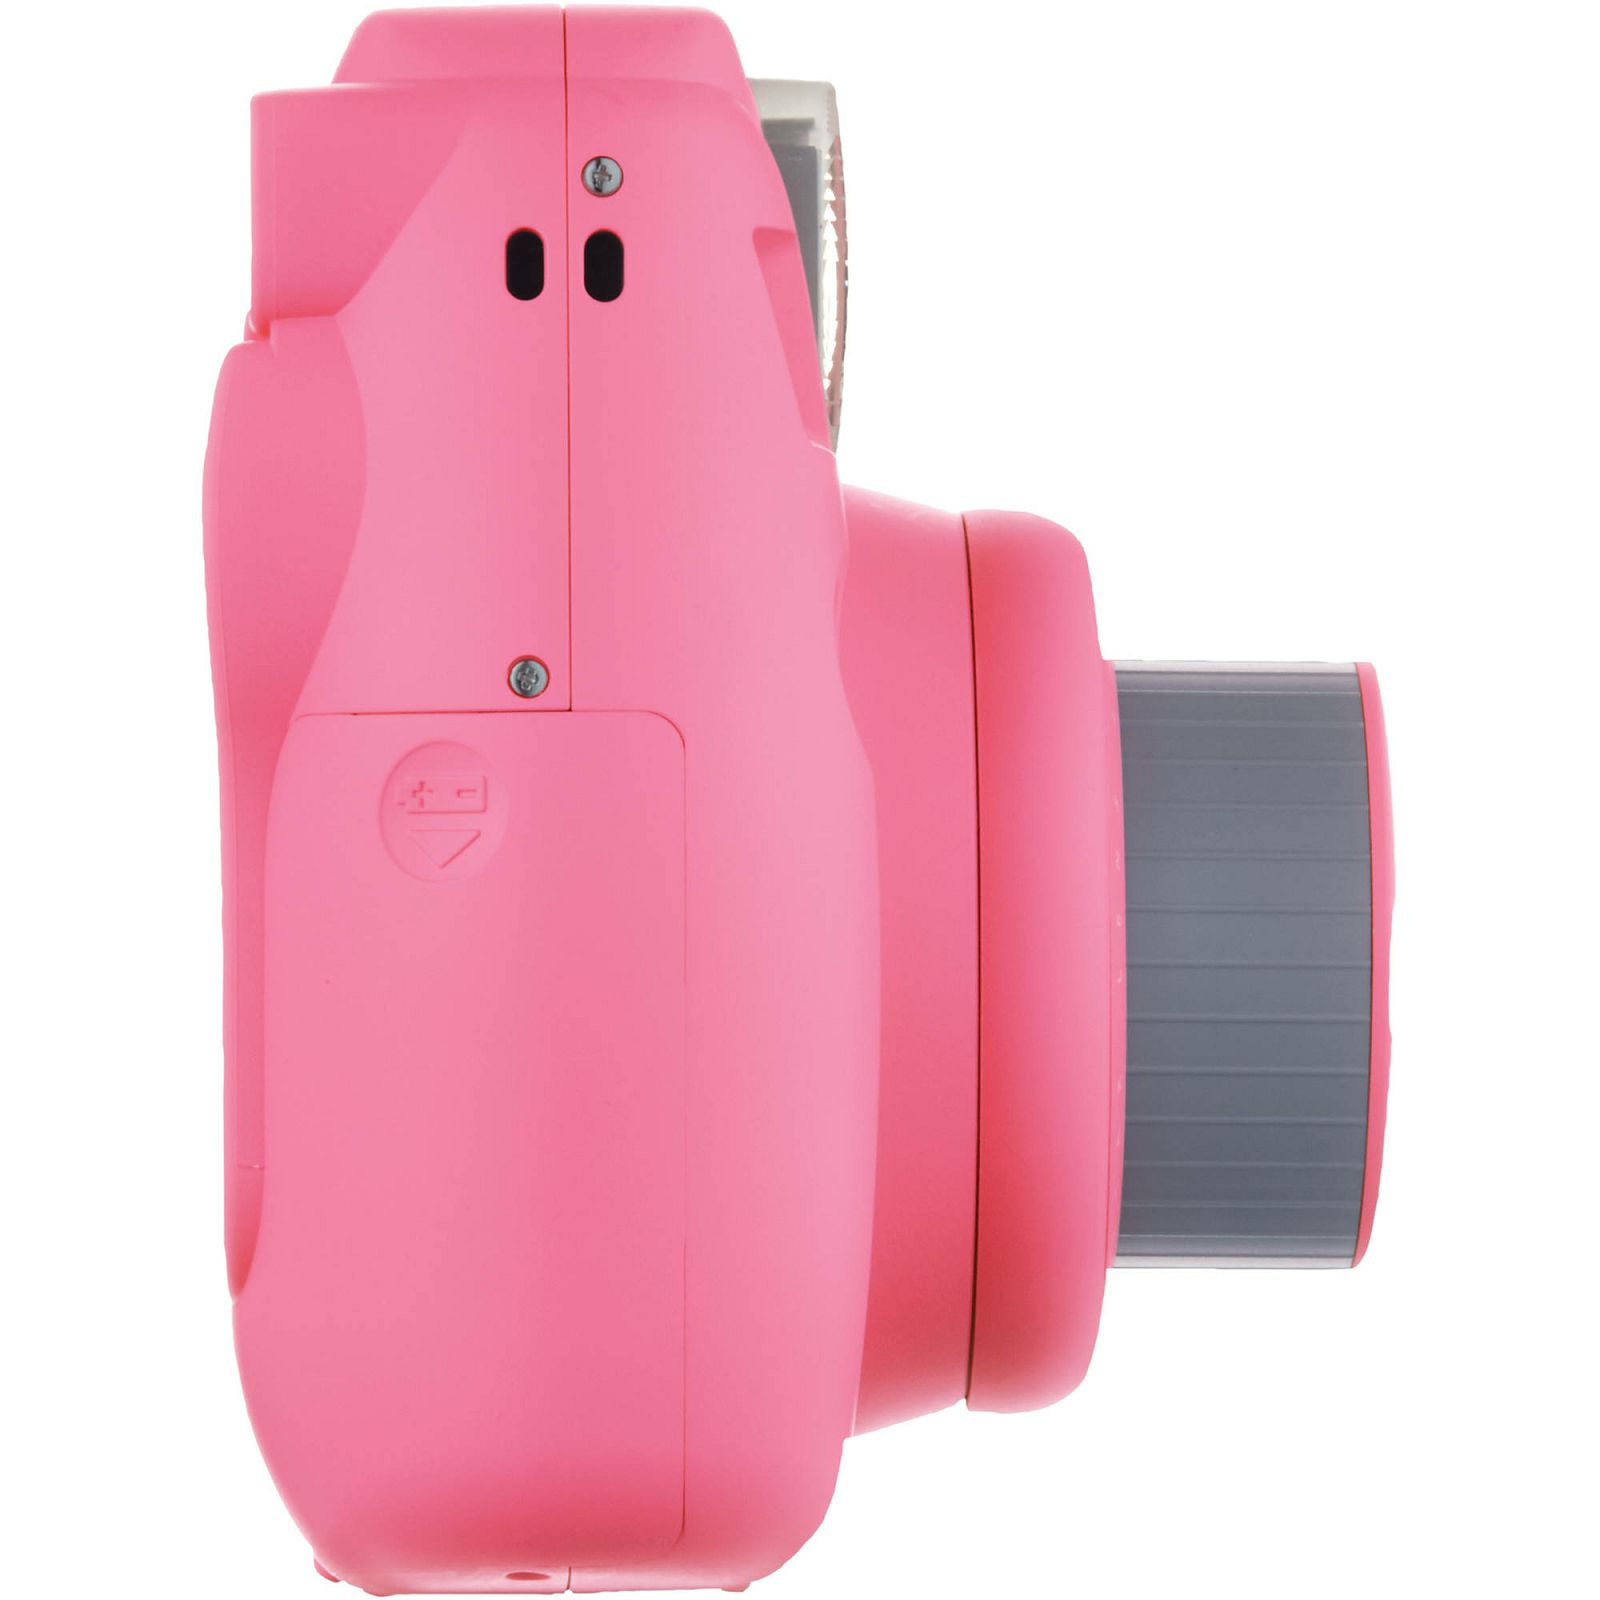 Fuji Instax Mini 9 KIT Flamingo Pink rozi (fotoaparat + album + 1x10 film papiri + futrola)